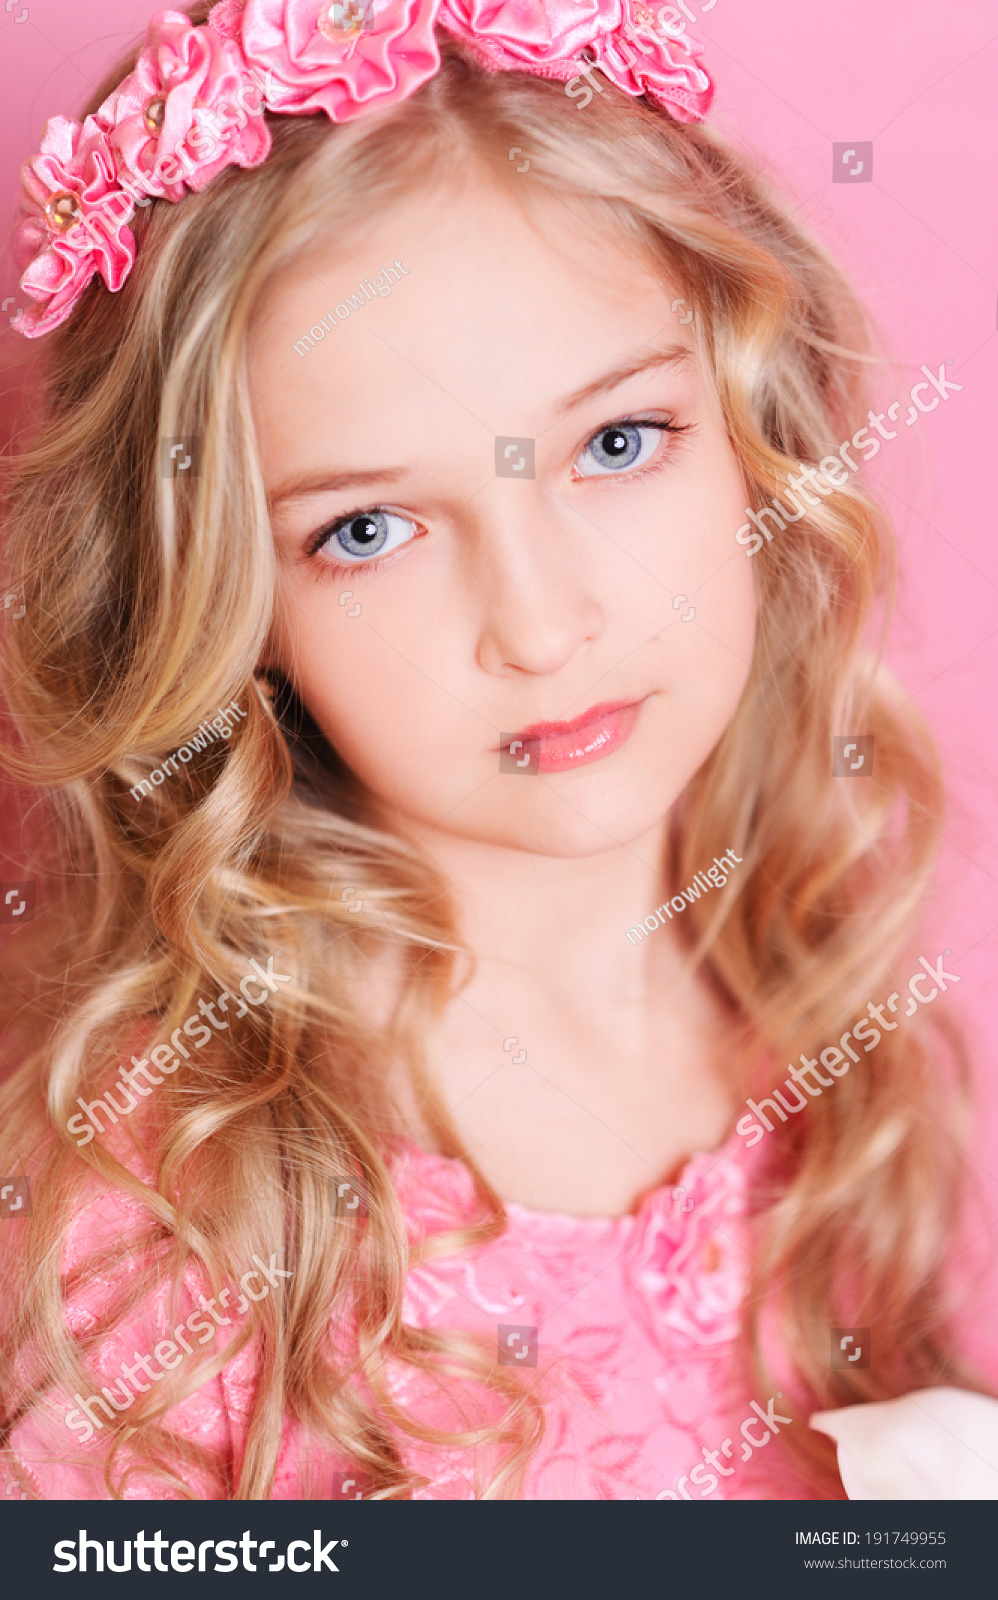 Cute Little Girl 1012 Year Old Stock Photo 191749955 - Shutterstock